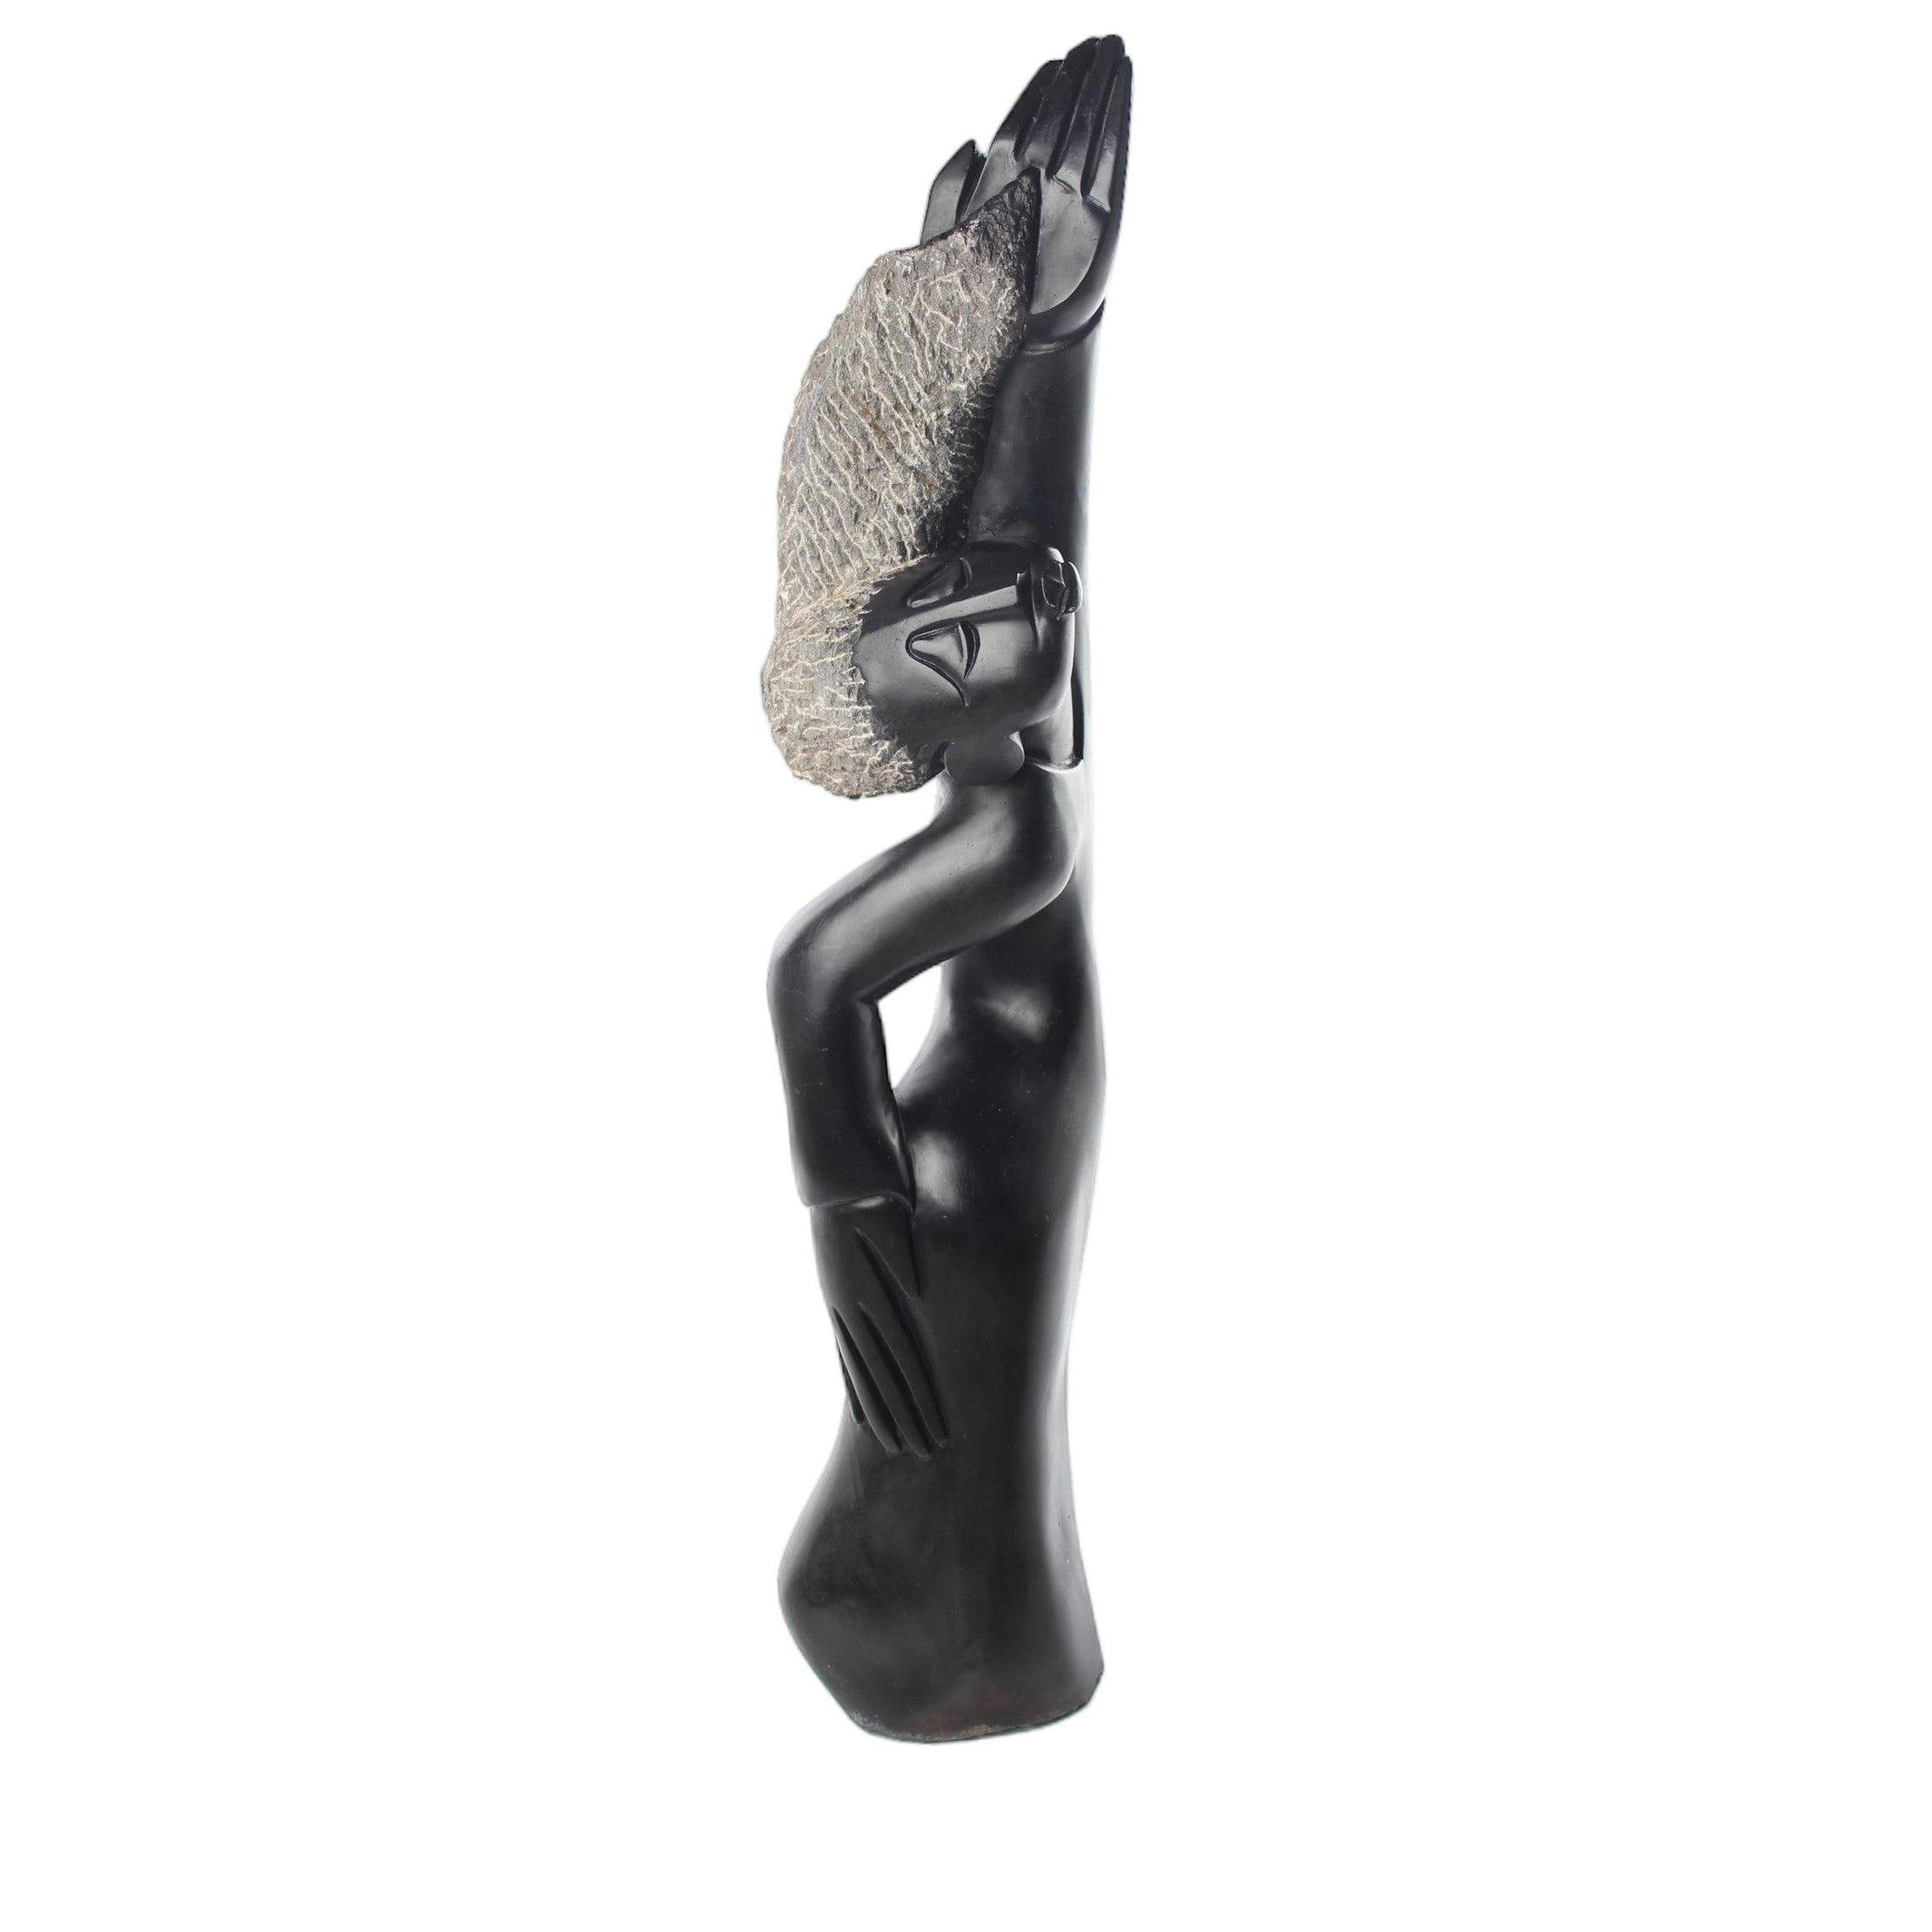 Shona Tribe Serpentine Stone Model ~39.4" Tall